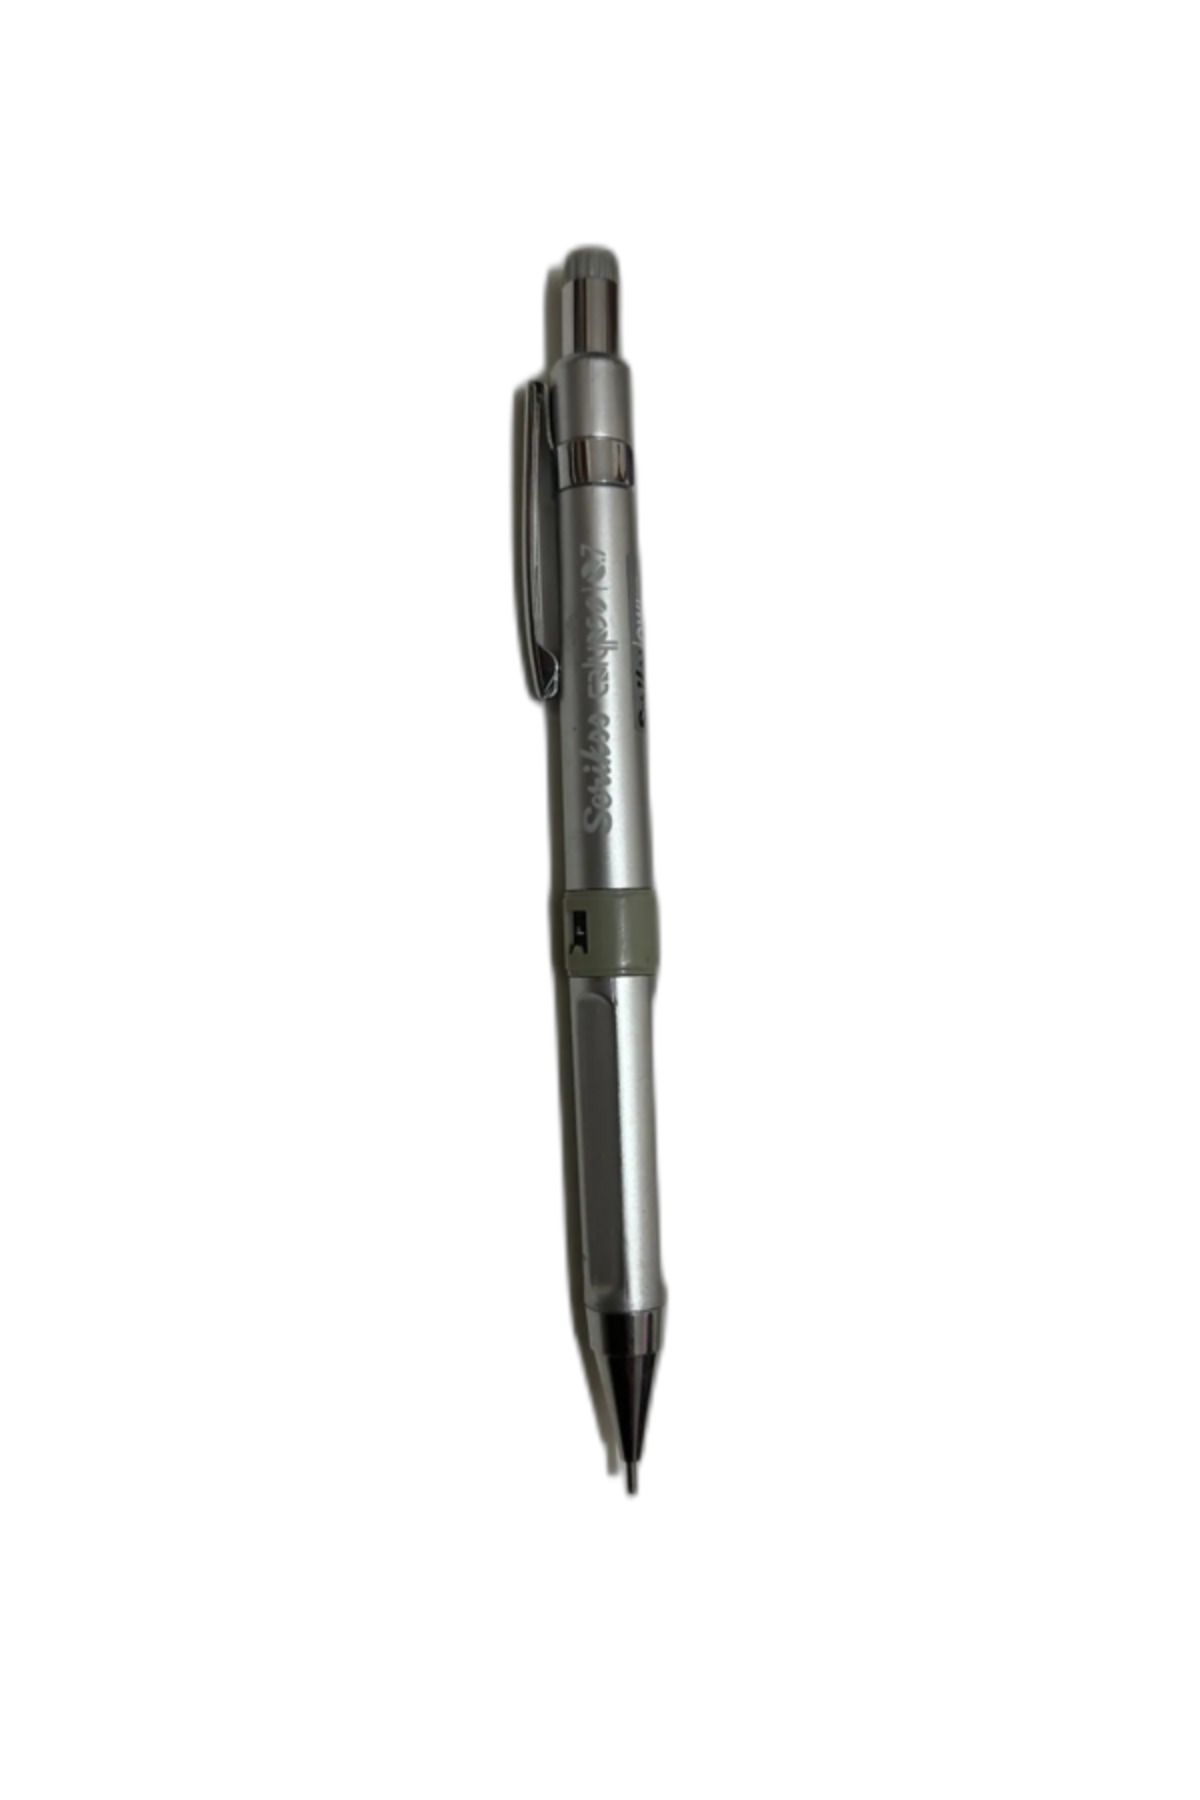 Scrikss calypso 0,7 silver renk uçlu kalem